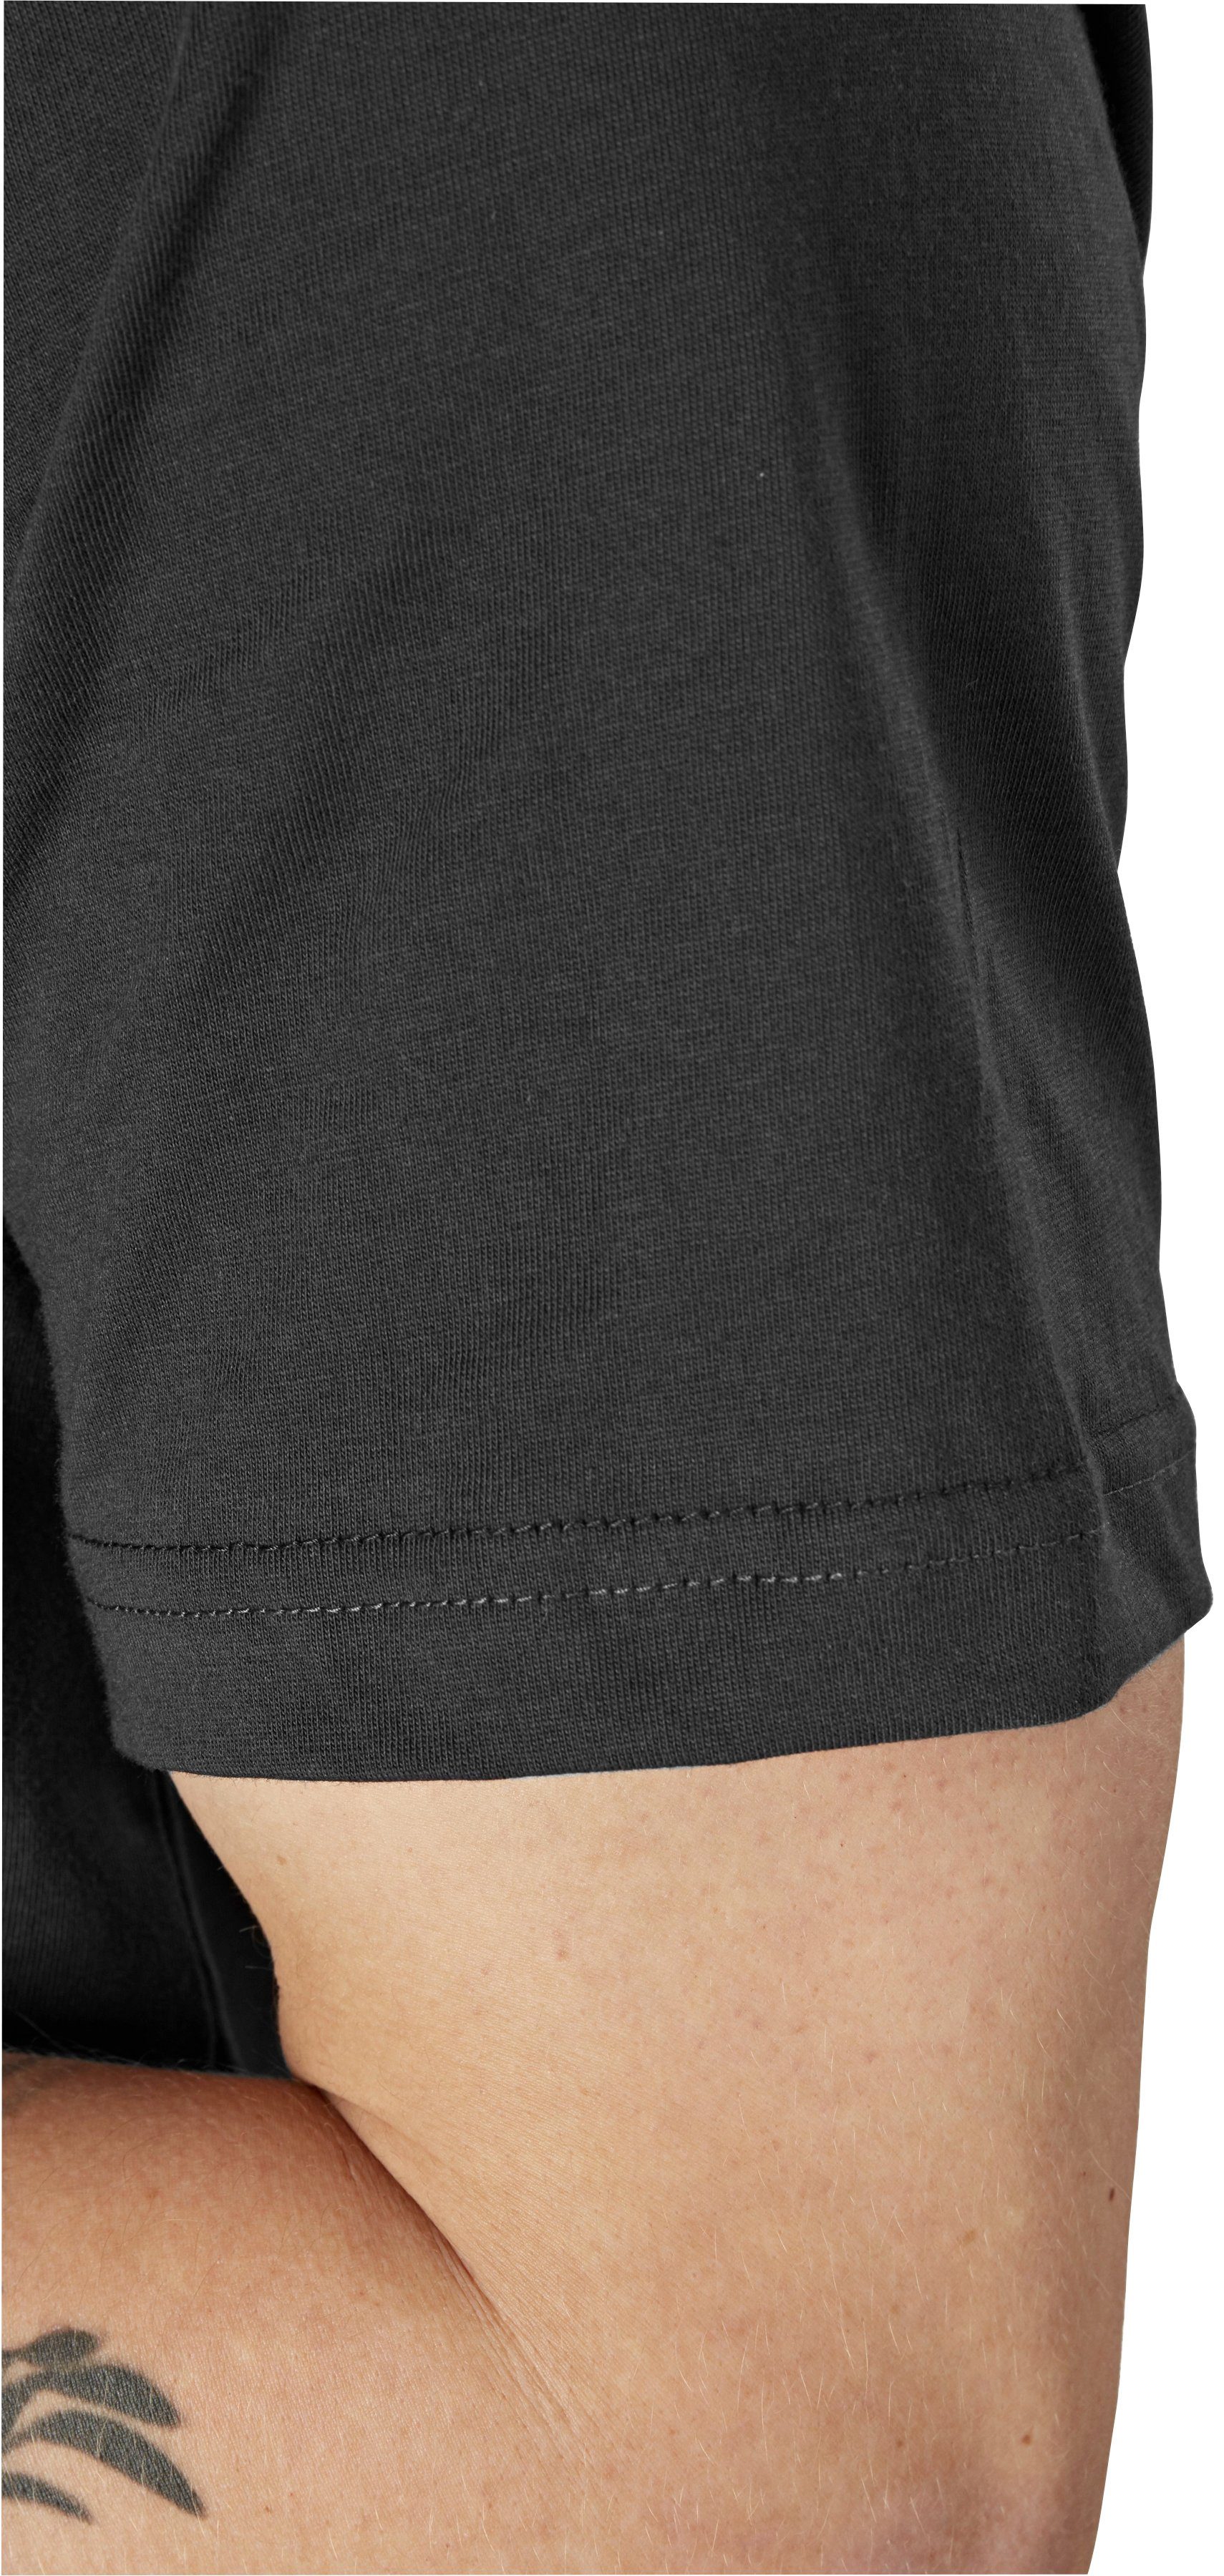 Dickies T-Shirt Baumwolle Rutland-Graphic 3-tlg) aus (Set